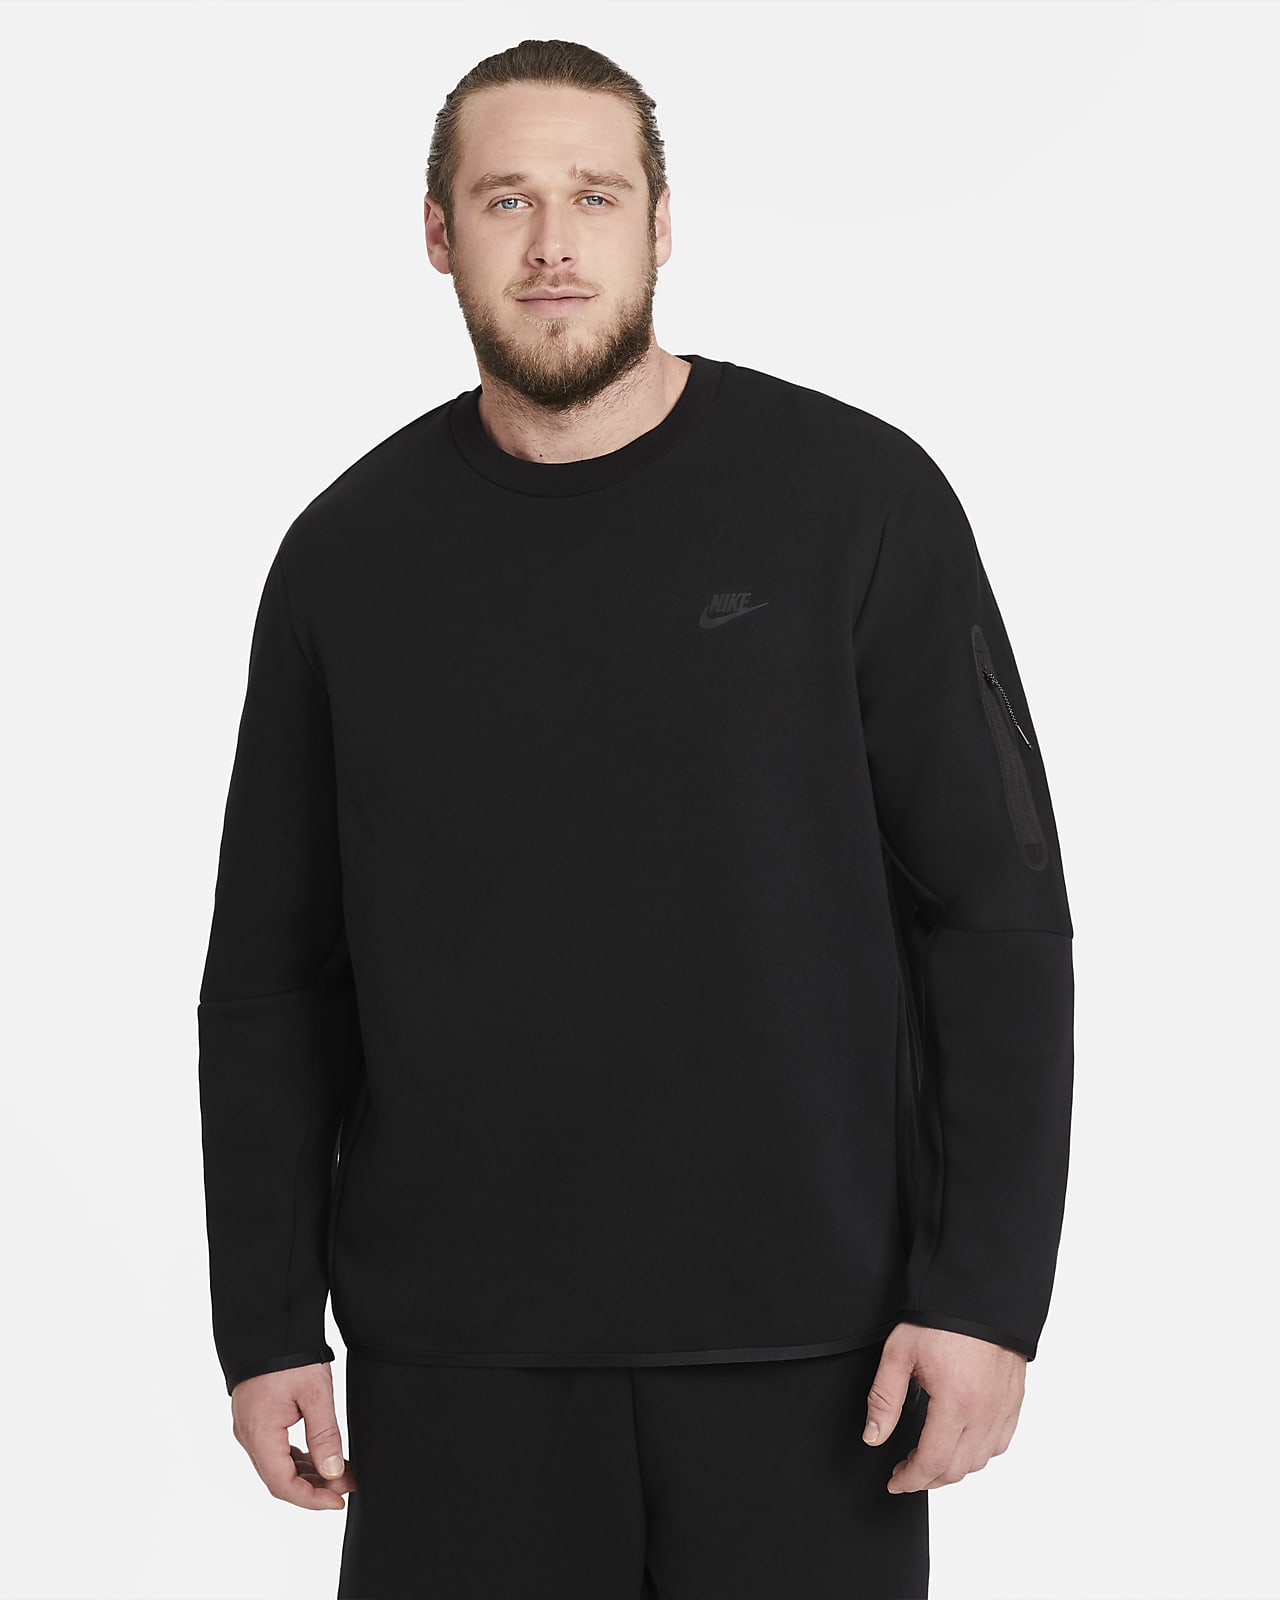 makkelijk te gebruiken overschot Waakzaamheid Nike Sportswear Tech Fleece Men's Crew Sweatshirt. Nike LU